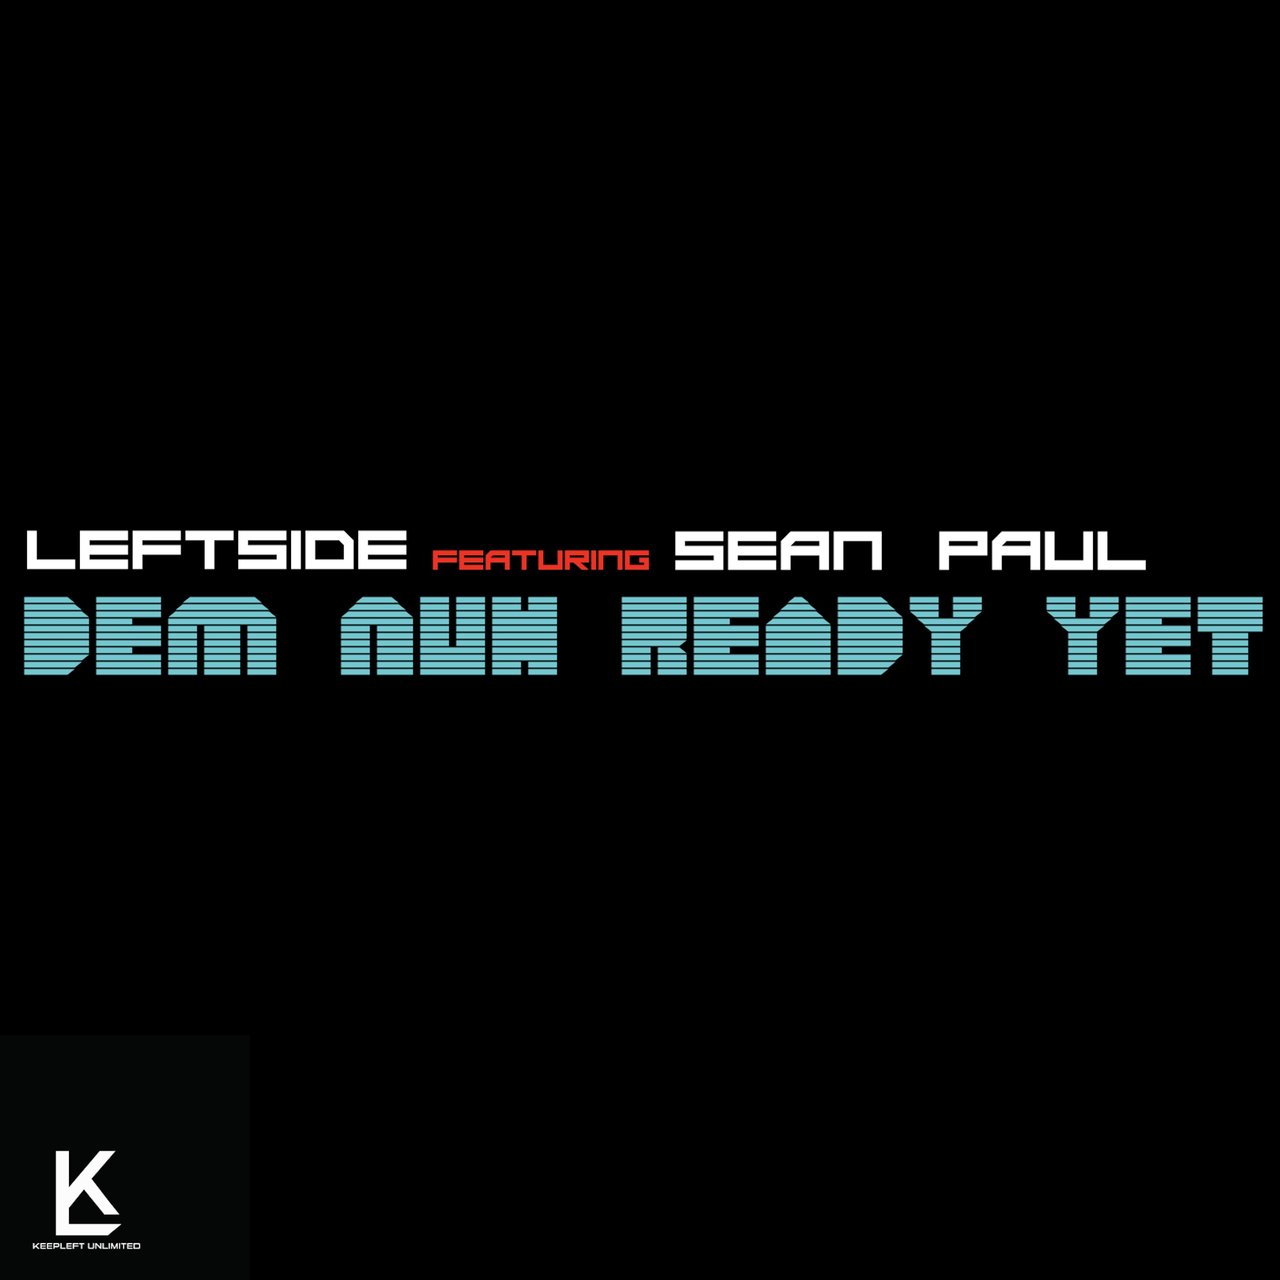 Leftside - Dem Nuh Ready Yet (ft. Sean Paul) (Cover)